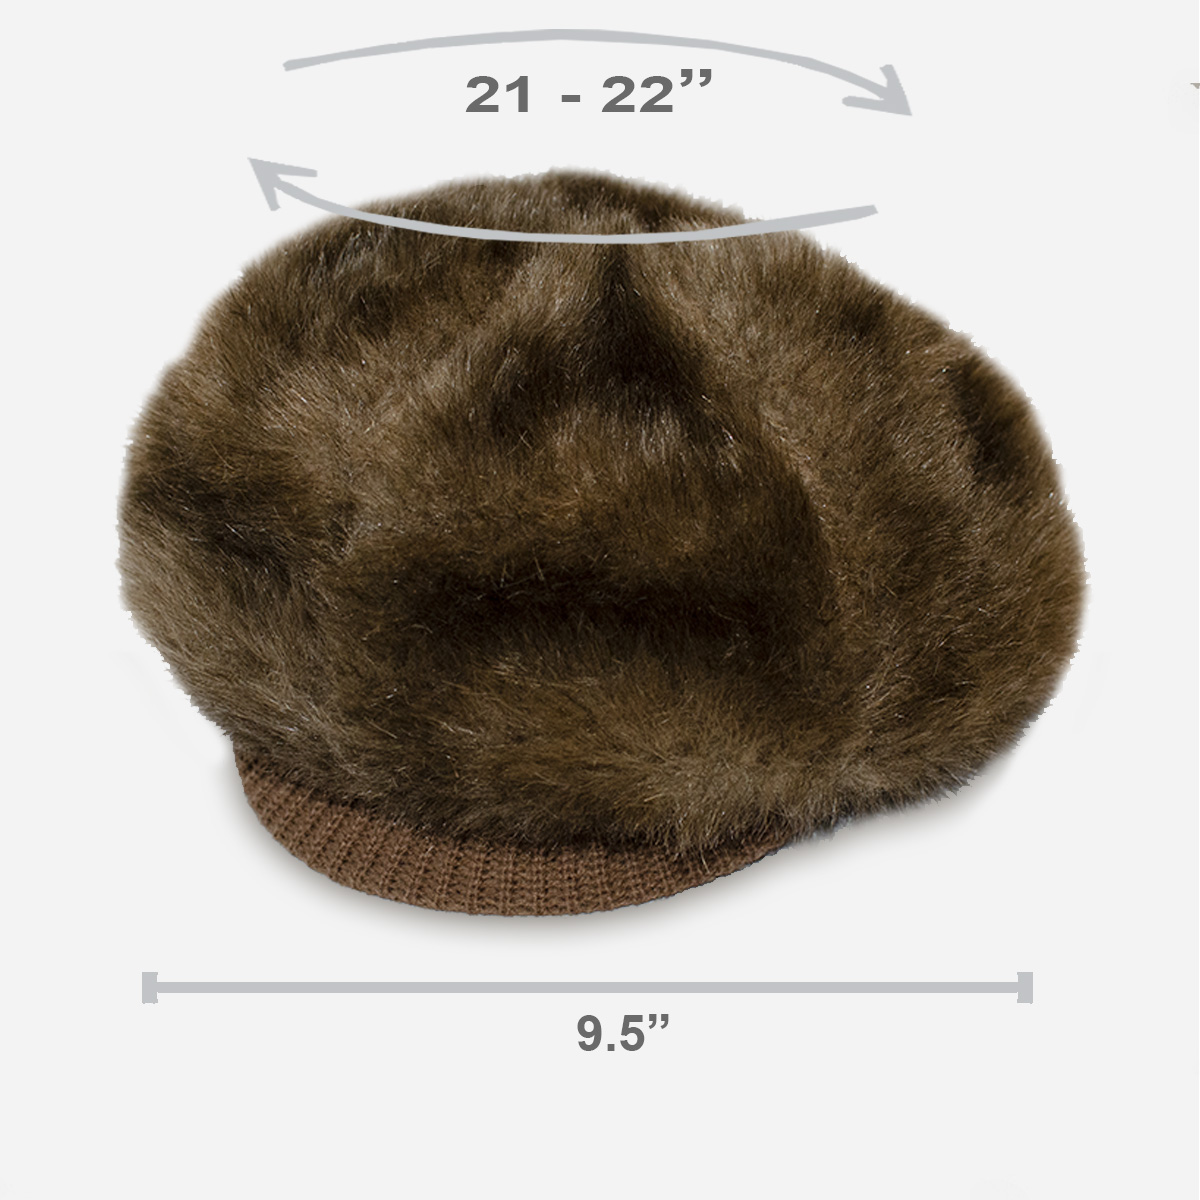 women's winter cap size